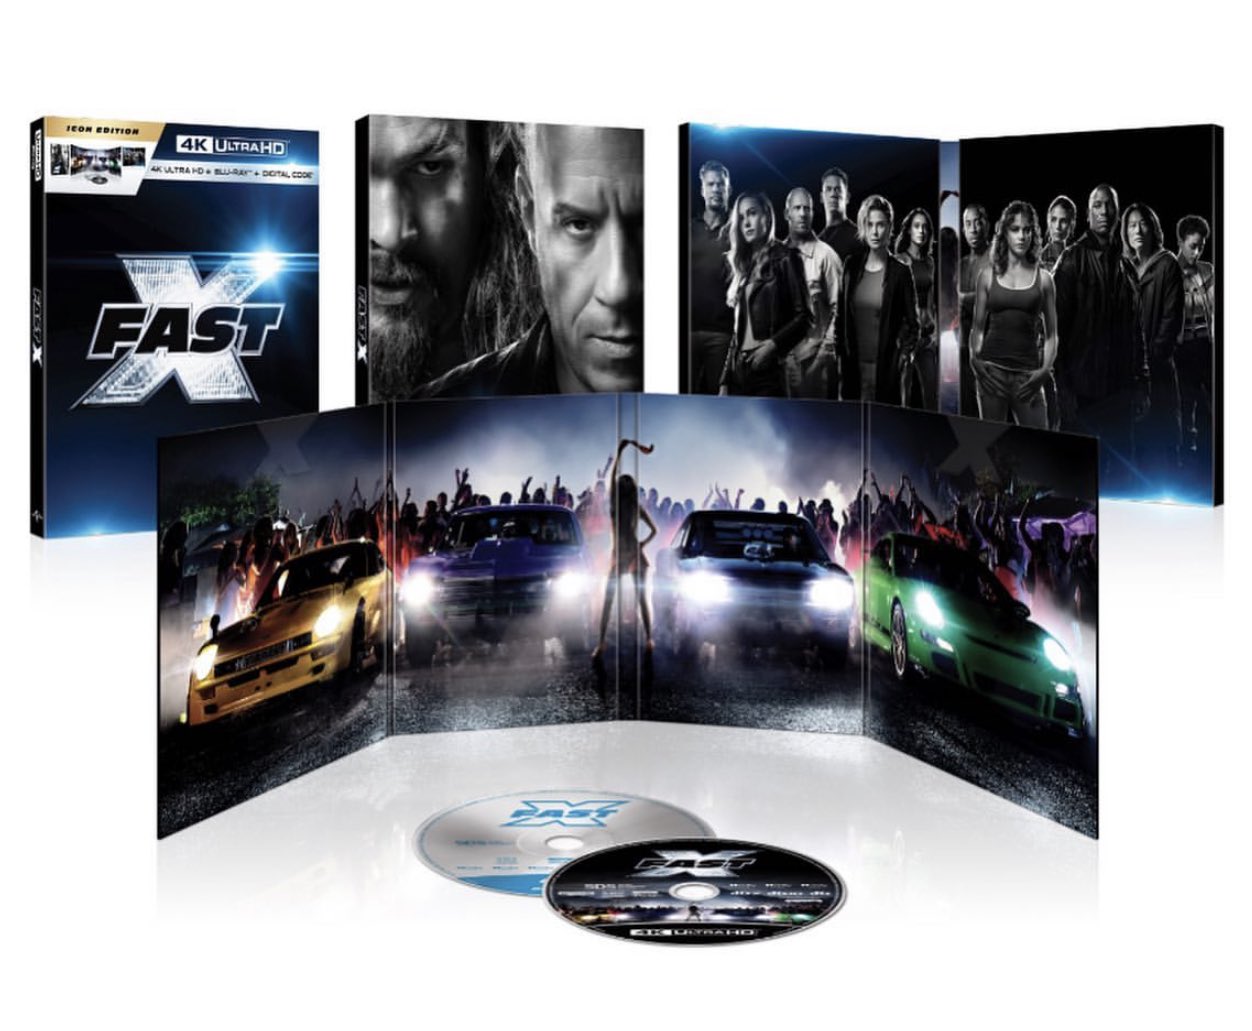 Watch Fast X - Buy Now on Digital, Blu-ray & DVD